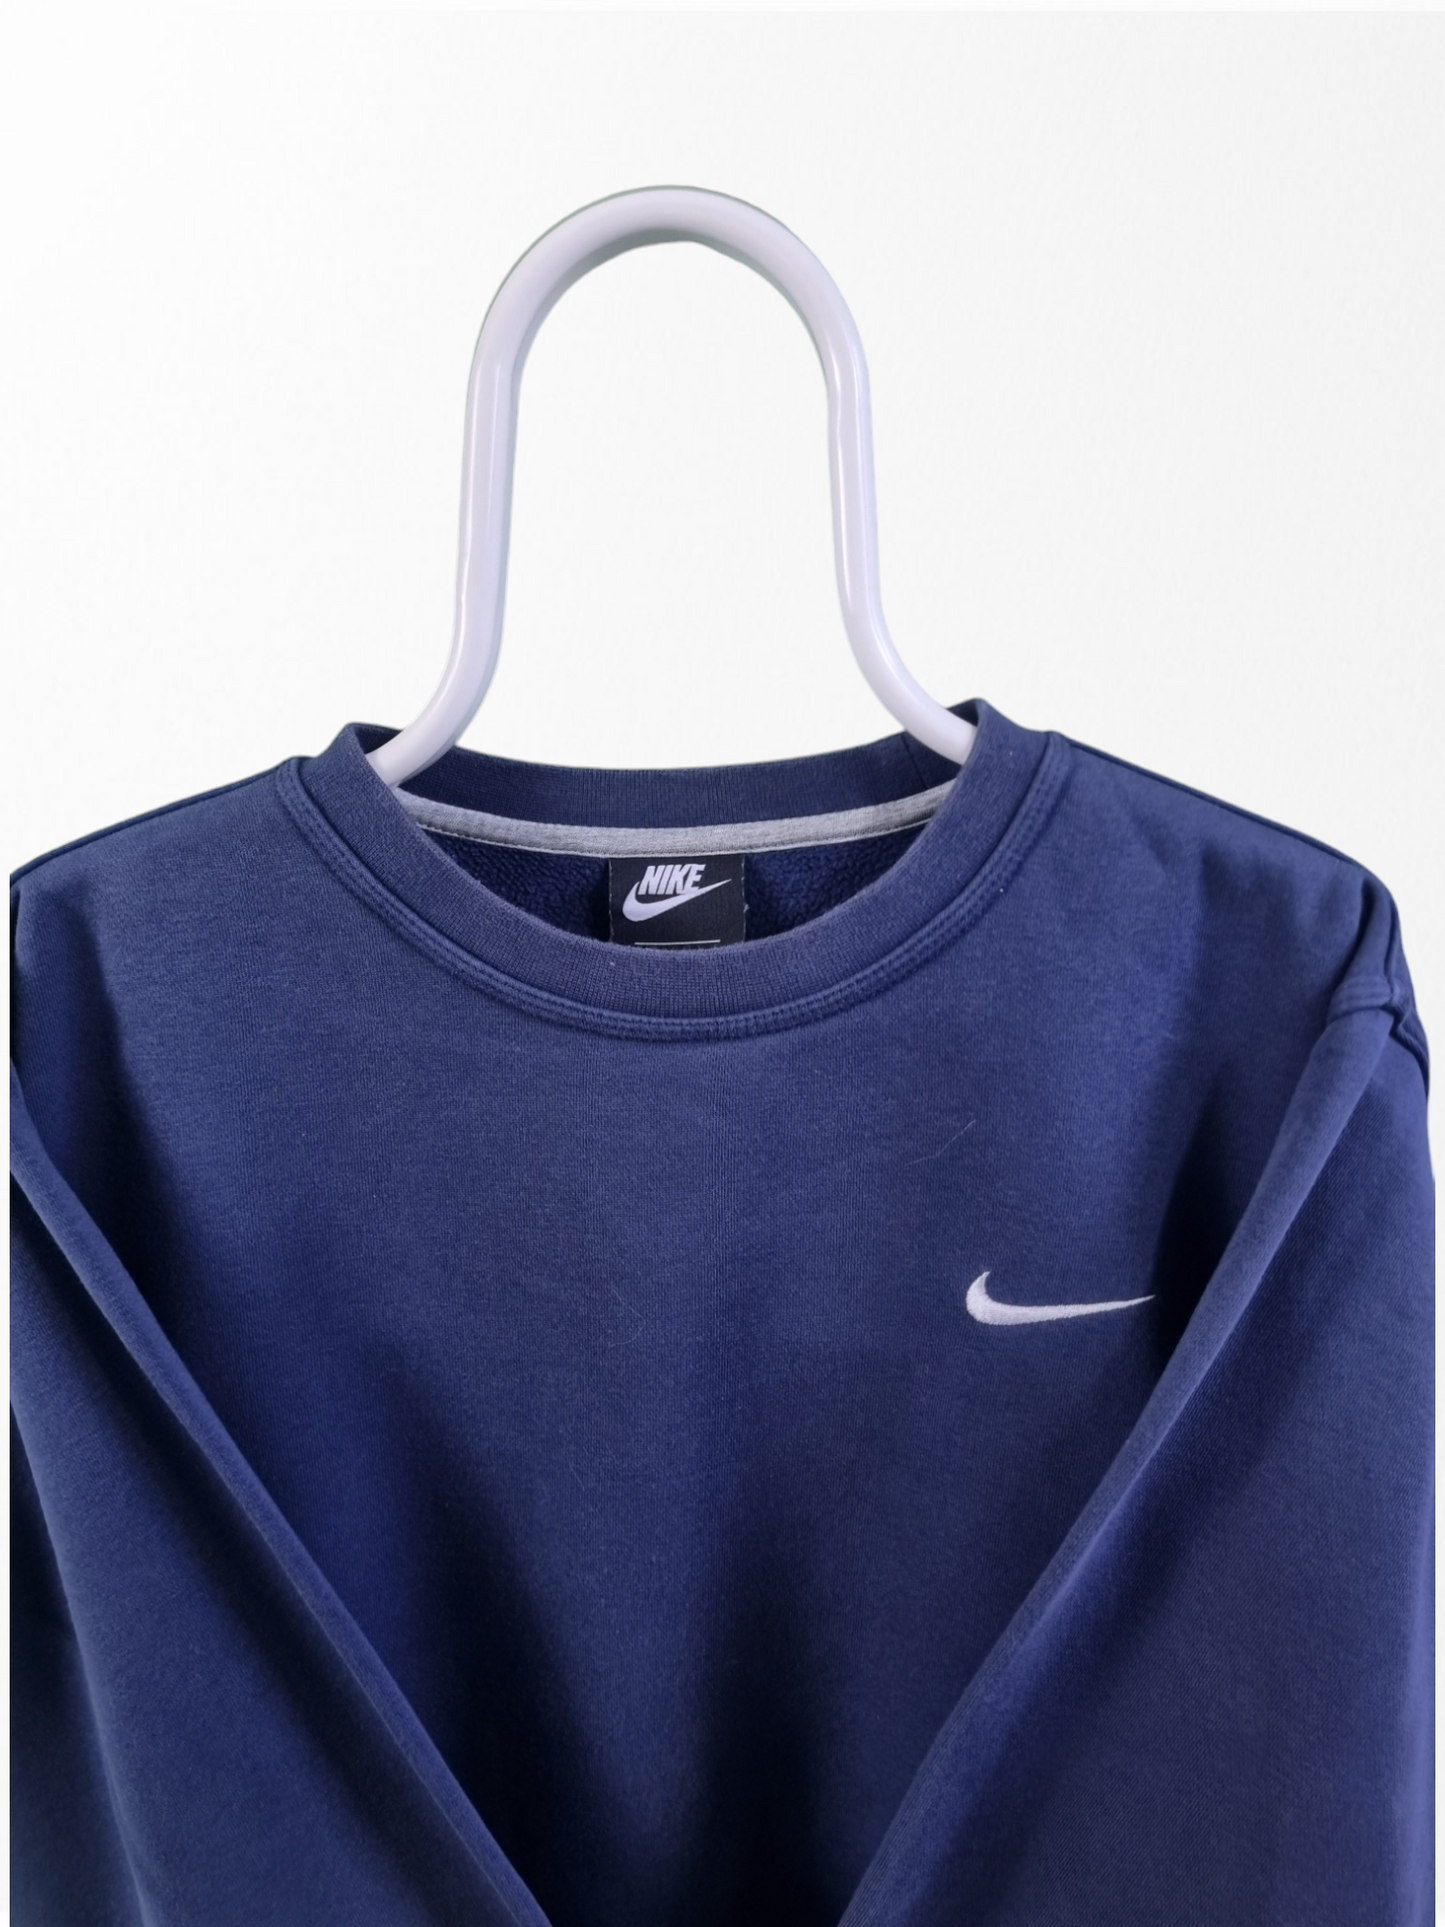 Nike chest swoosh sweater maat L